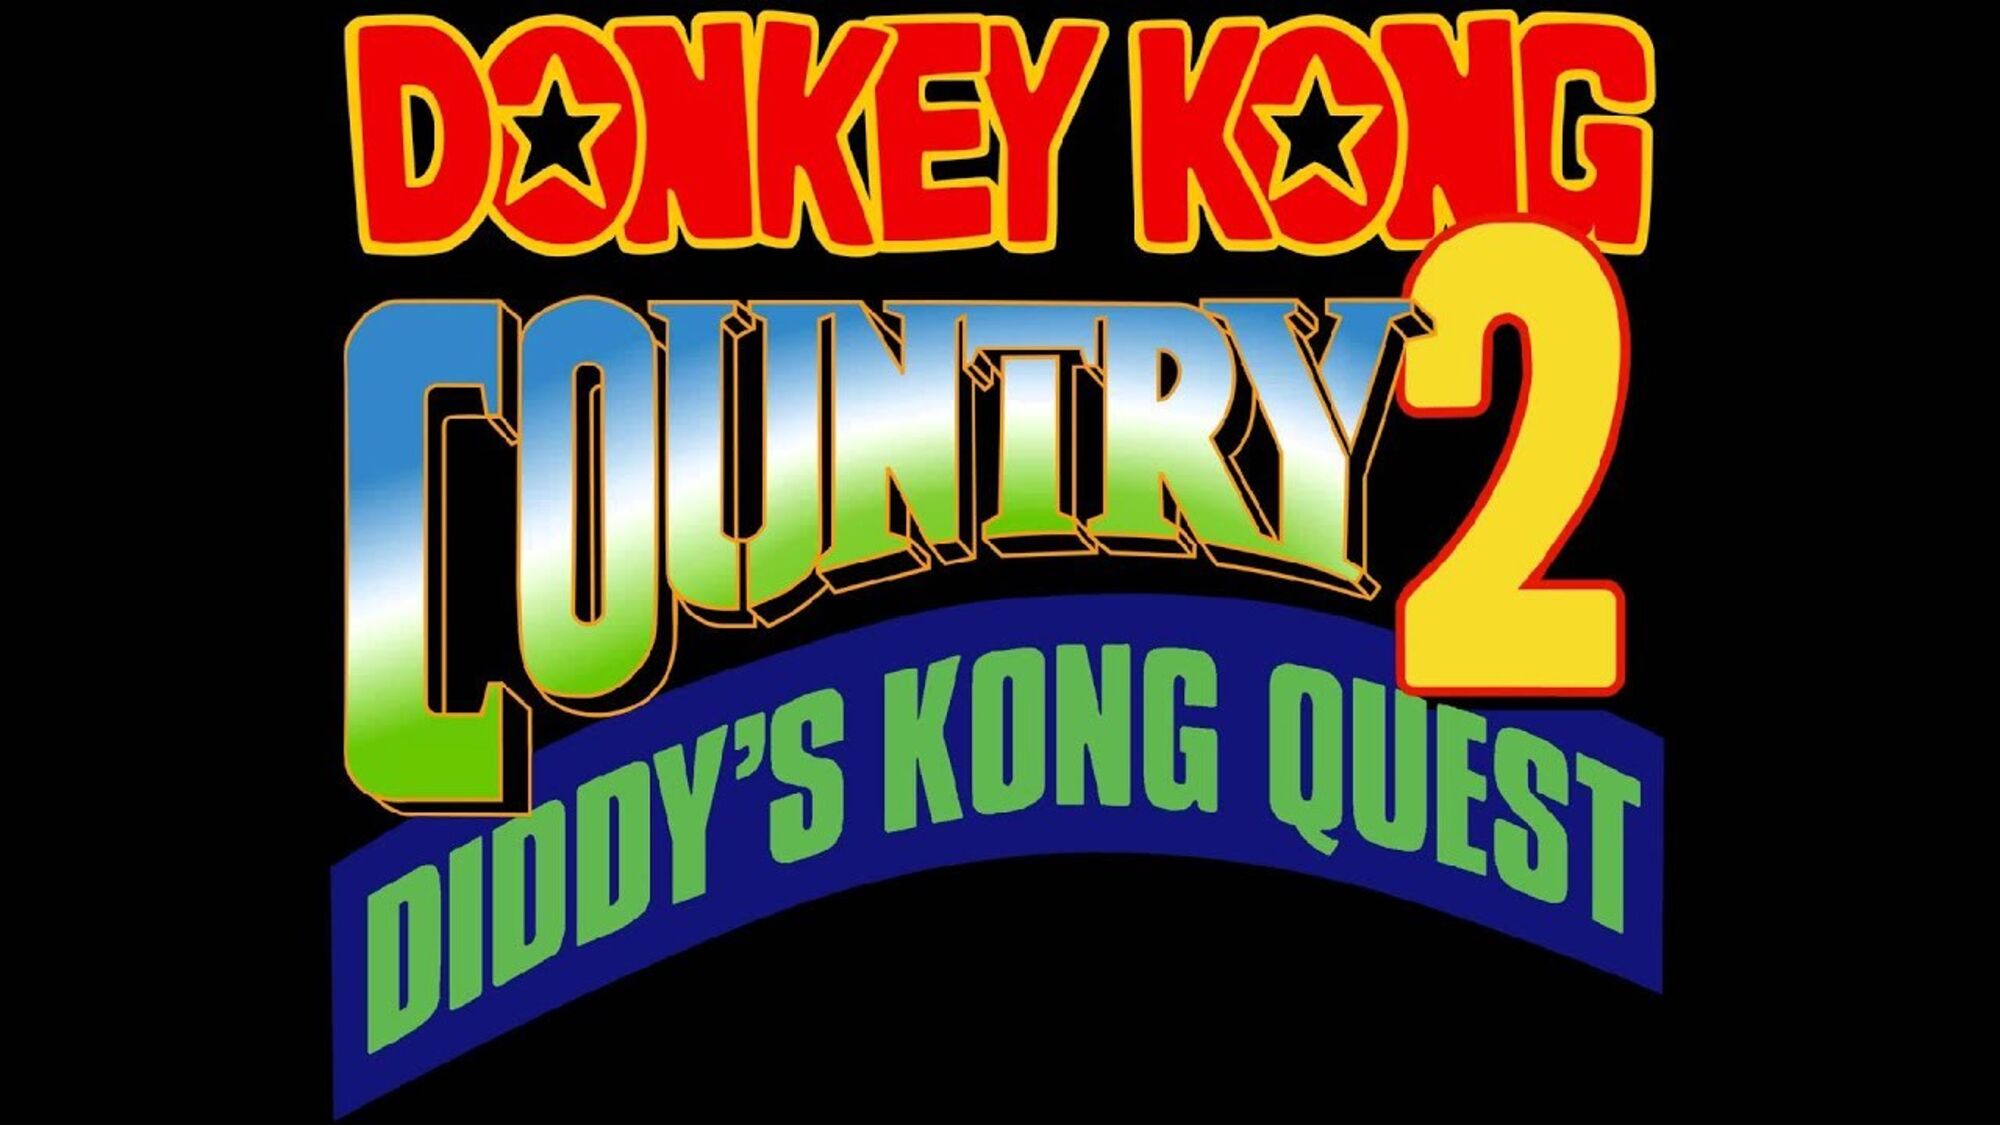 David, Donkey, Idol, Klaim, Kong, Nintendo, Dood, Tuesday